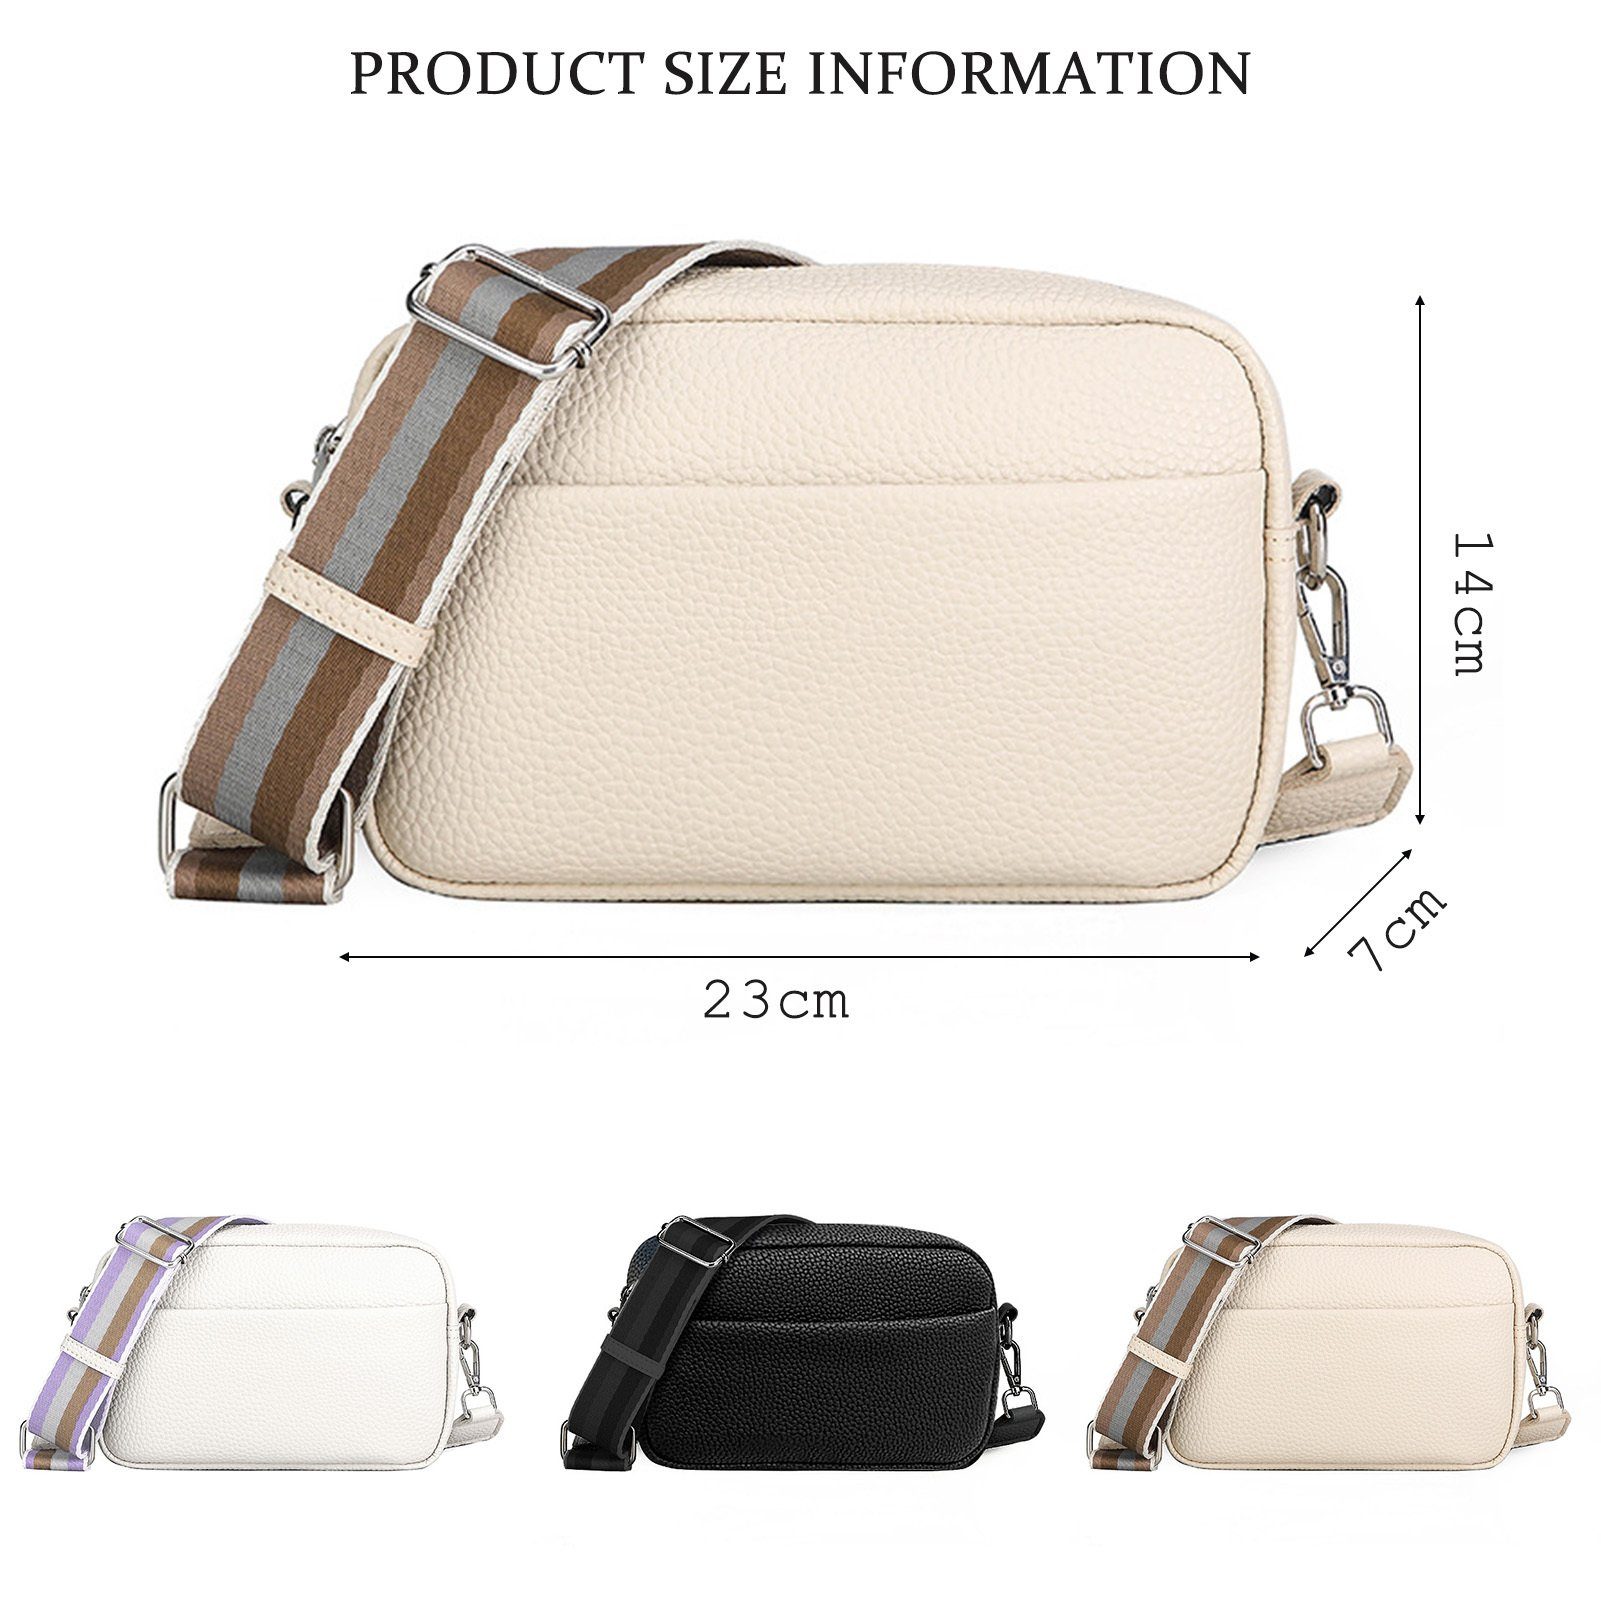 Aus beige Handtasche, Blusmart Tragbar Bag Crossbody PU-Leder, Umhängetasche Damen-Umhängetasche